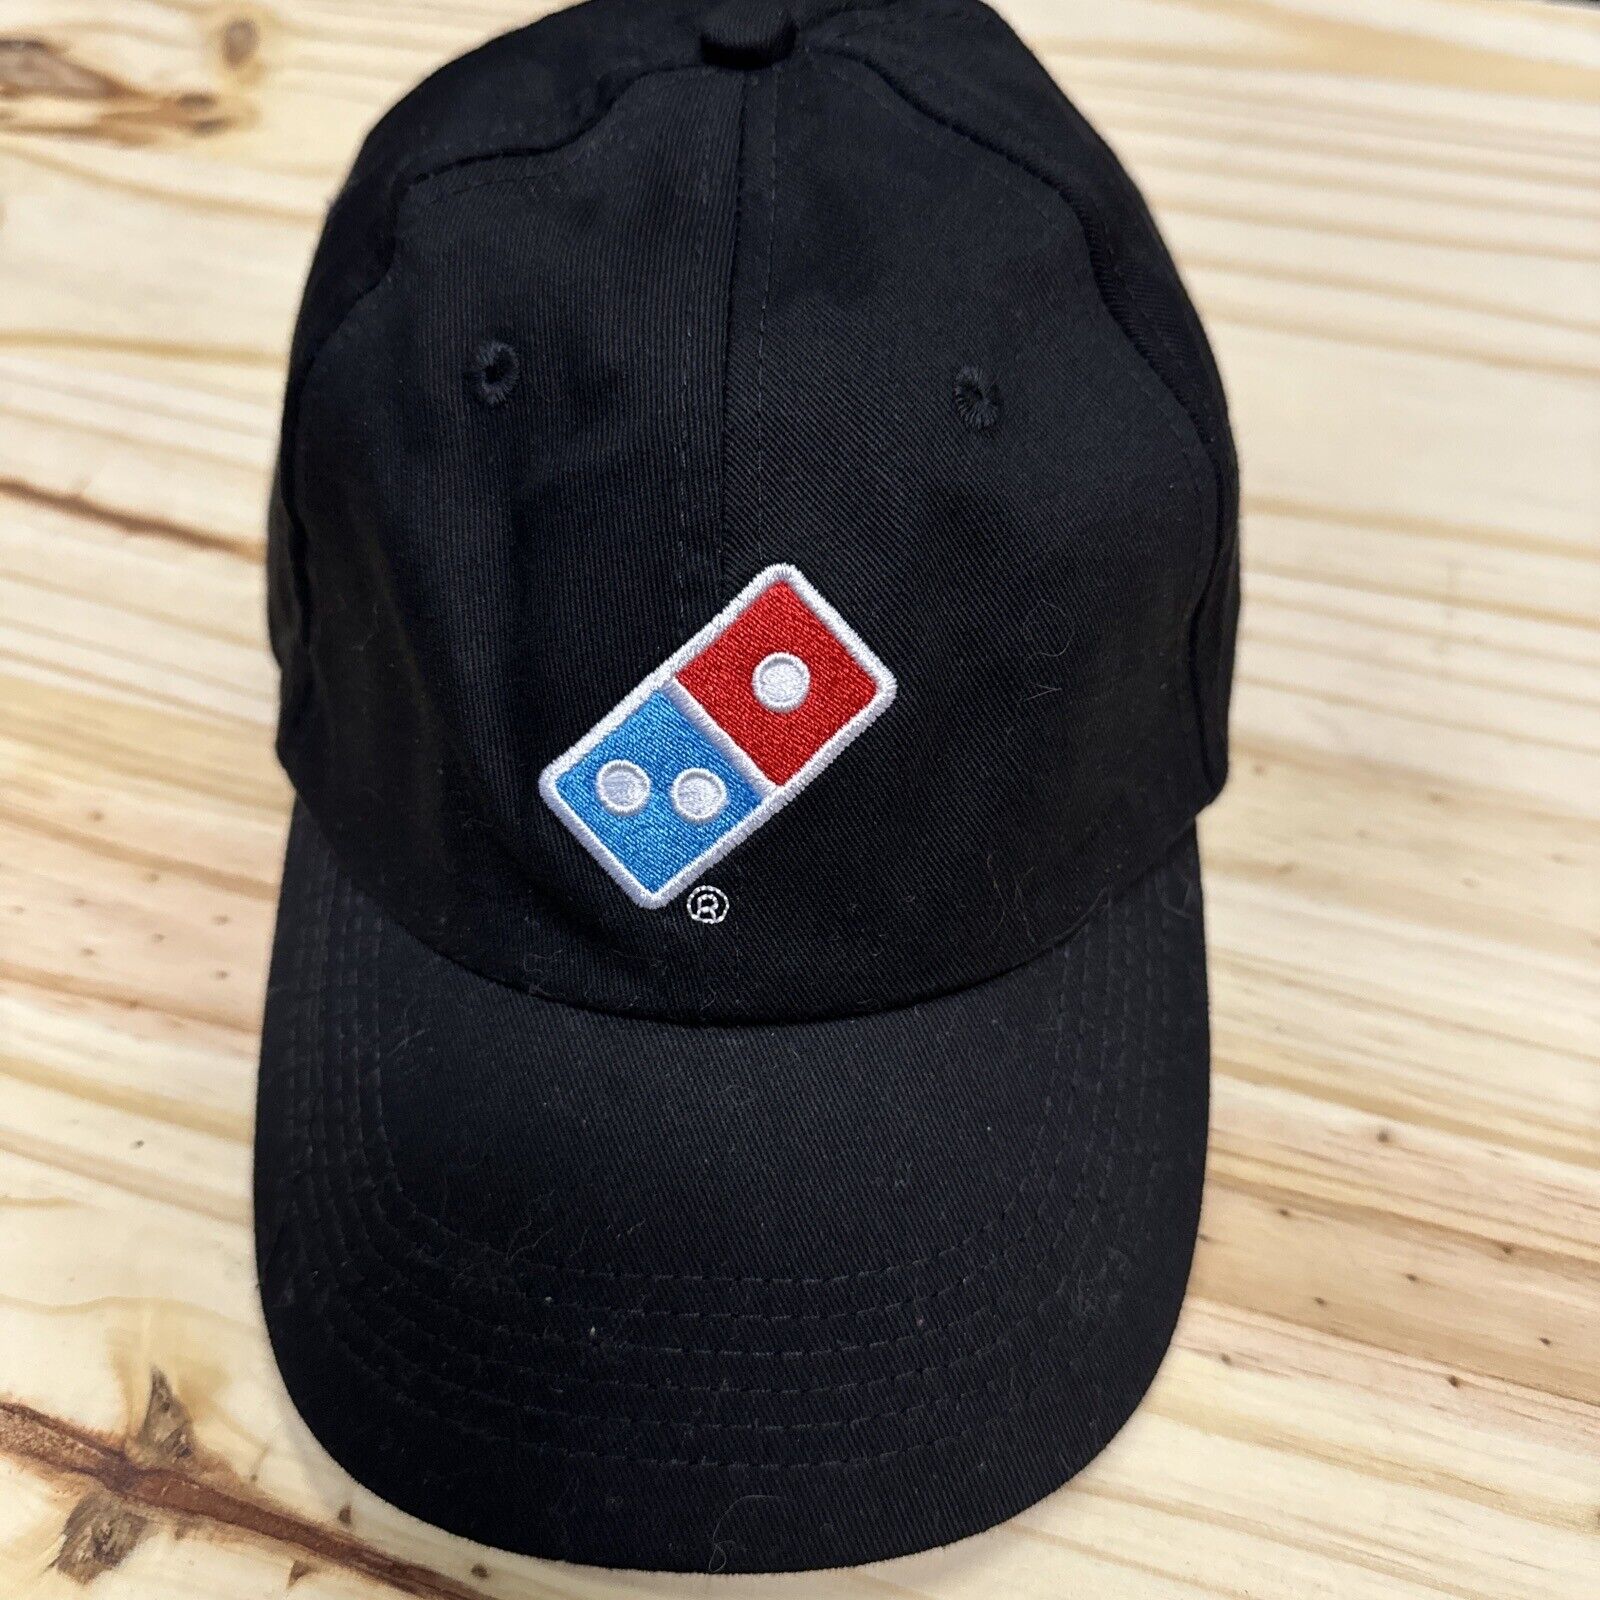 Dominos Pizza Employee Gear Hat Baseball Cap Logo Black Adjustable Strap Back